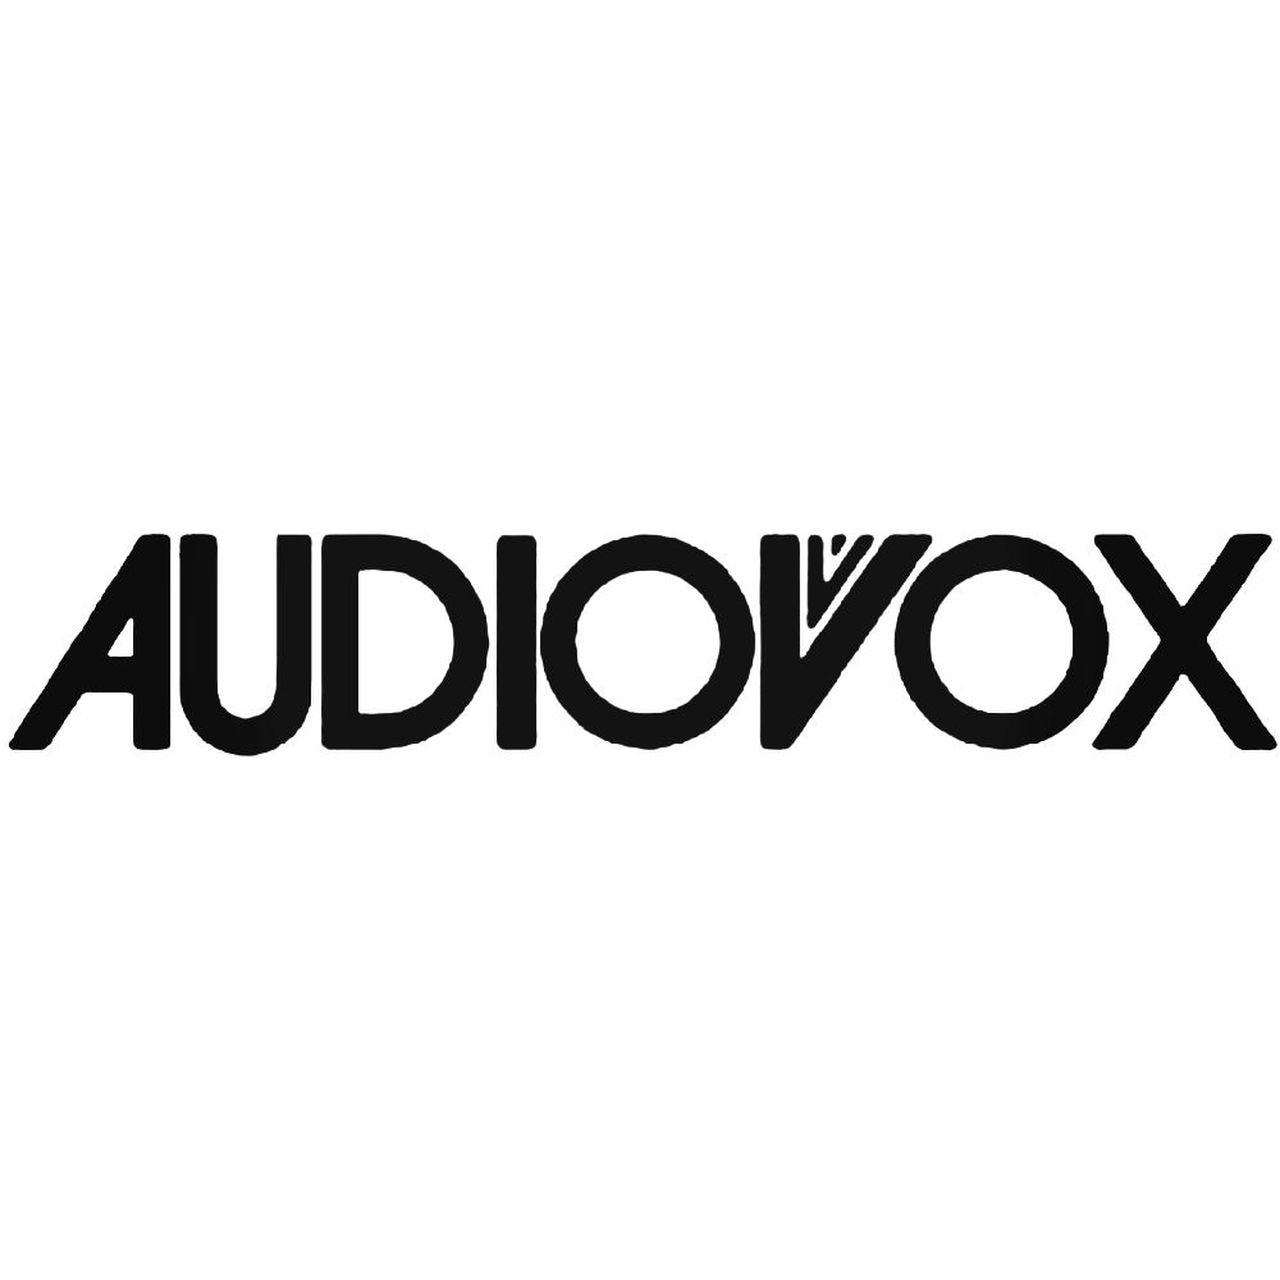 Audiovox Logo - Audiovox Logo 1 Sticker